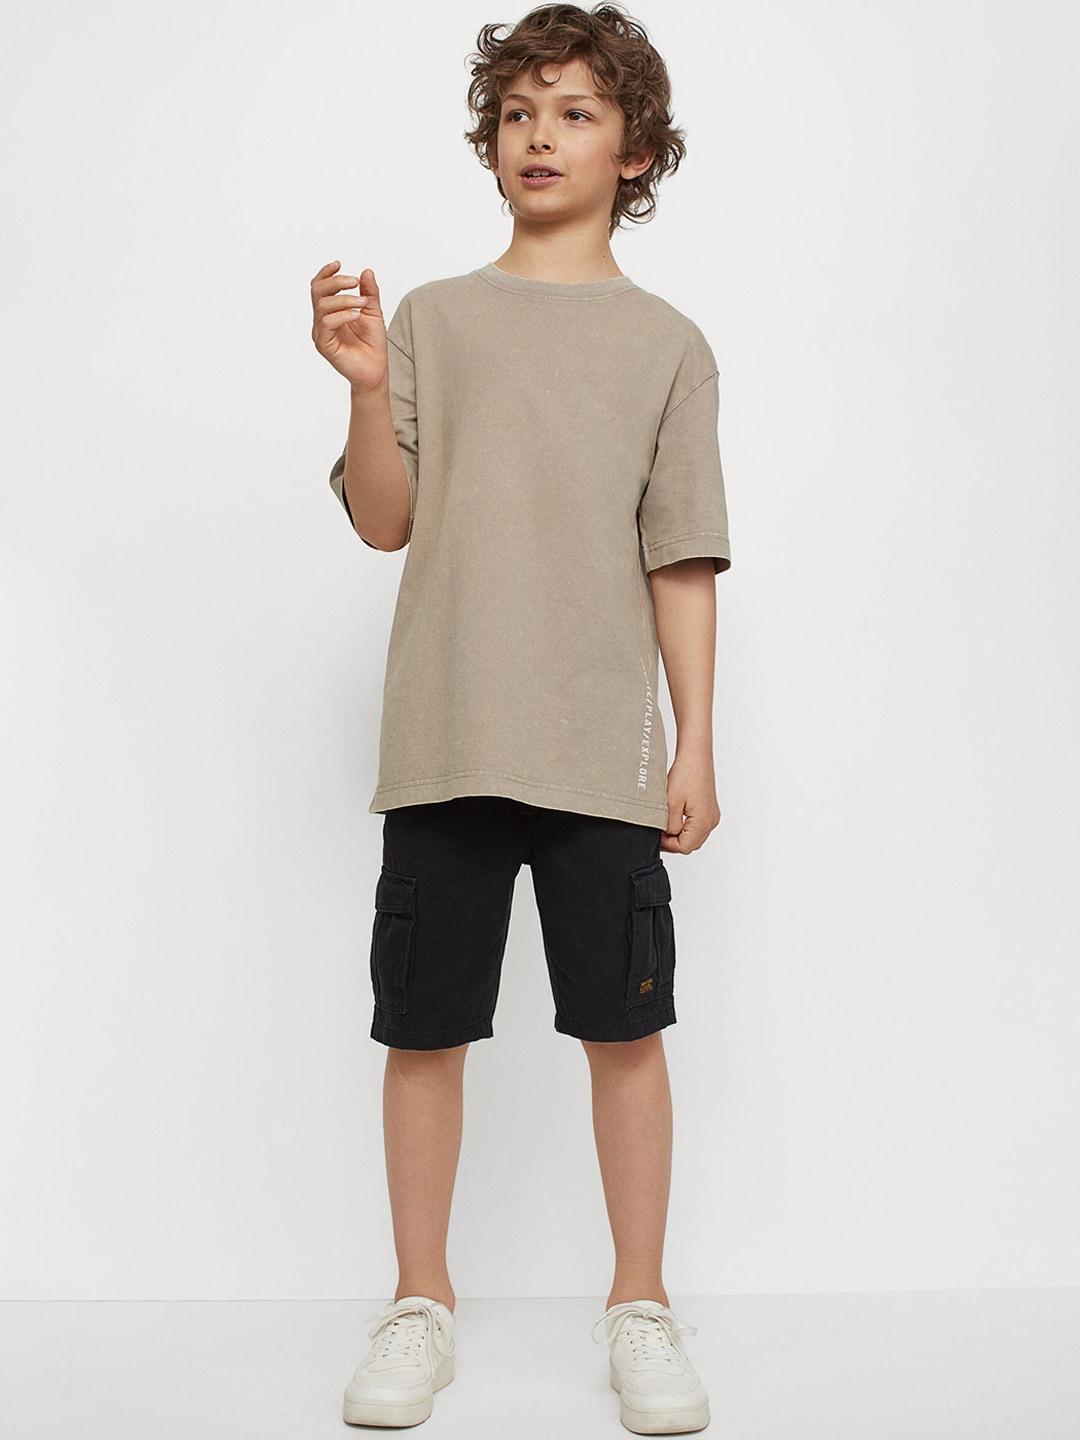 H&M Boys Black Solid Cotton Shorts